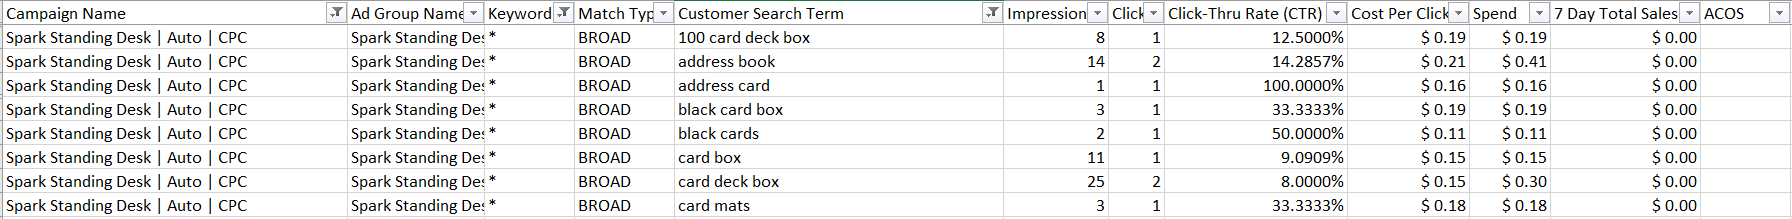 Screenshot showing a spreadsheet